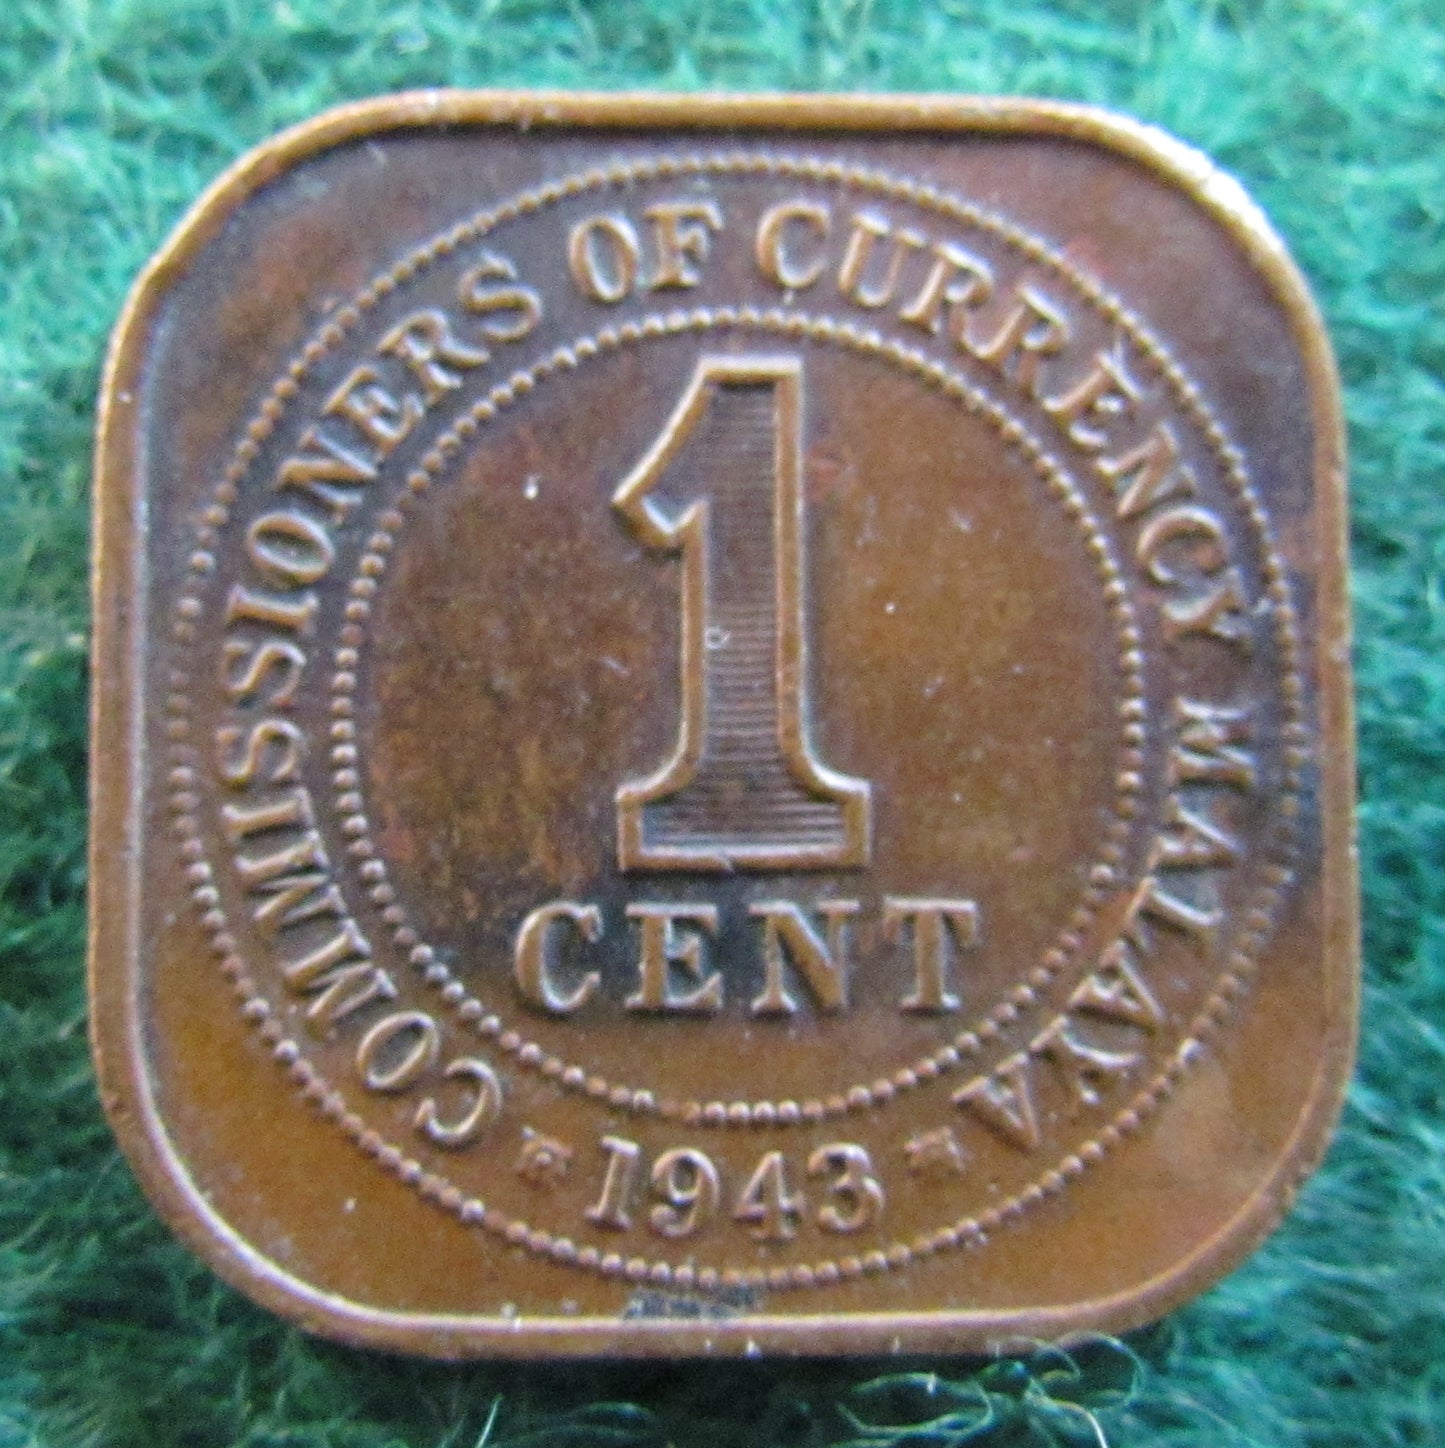 Malaya 1943 One Cent King George VI Coin - Circulated